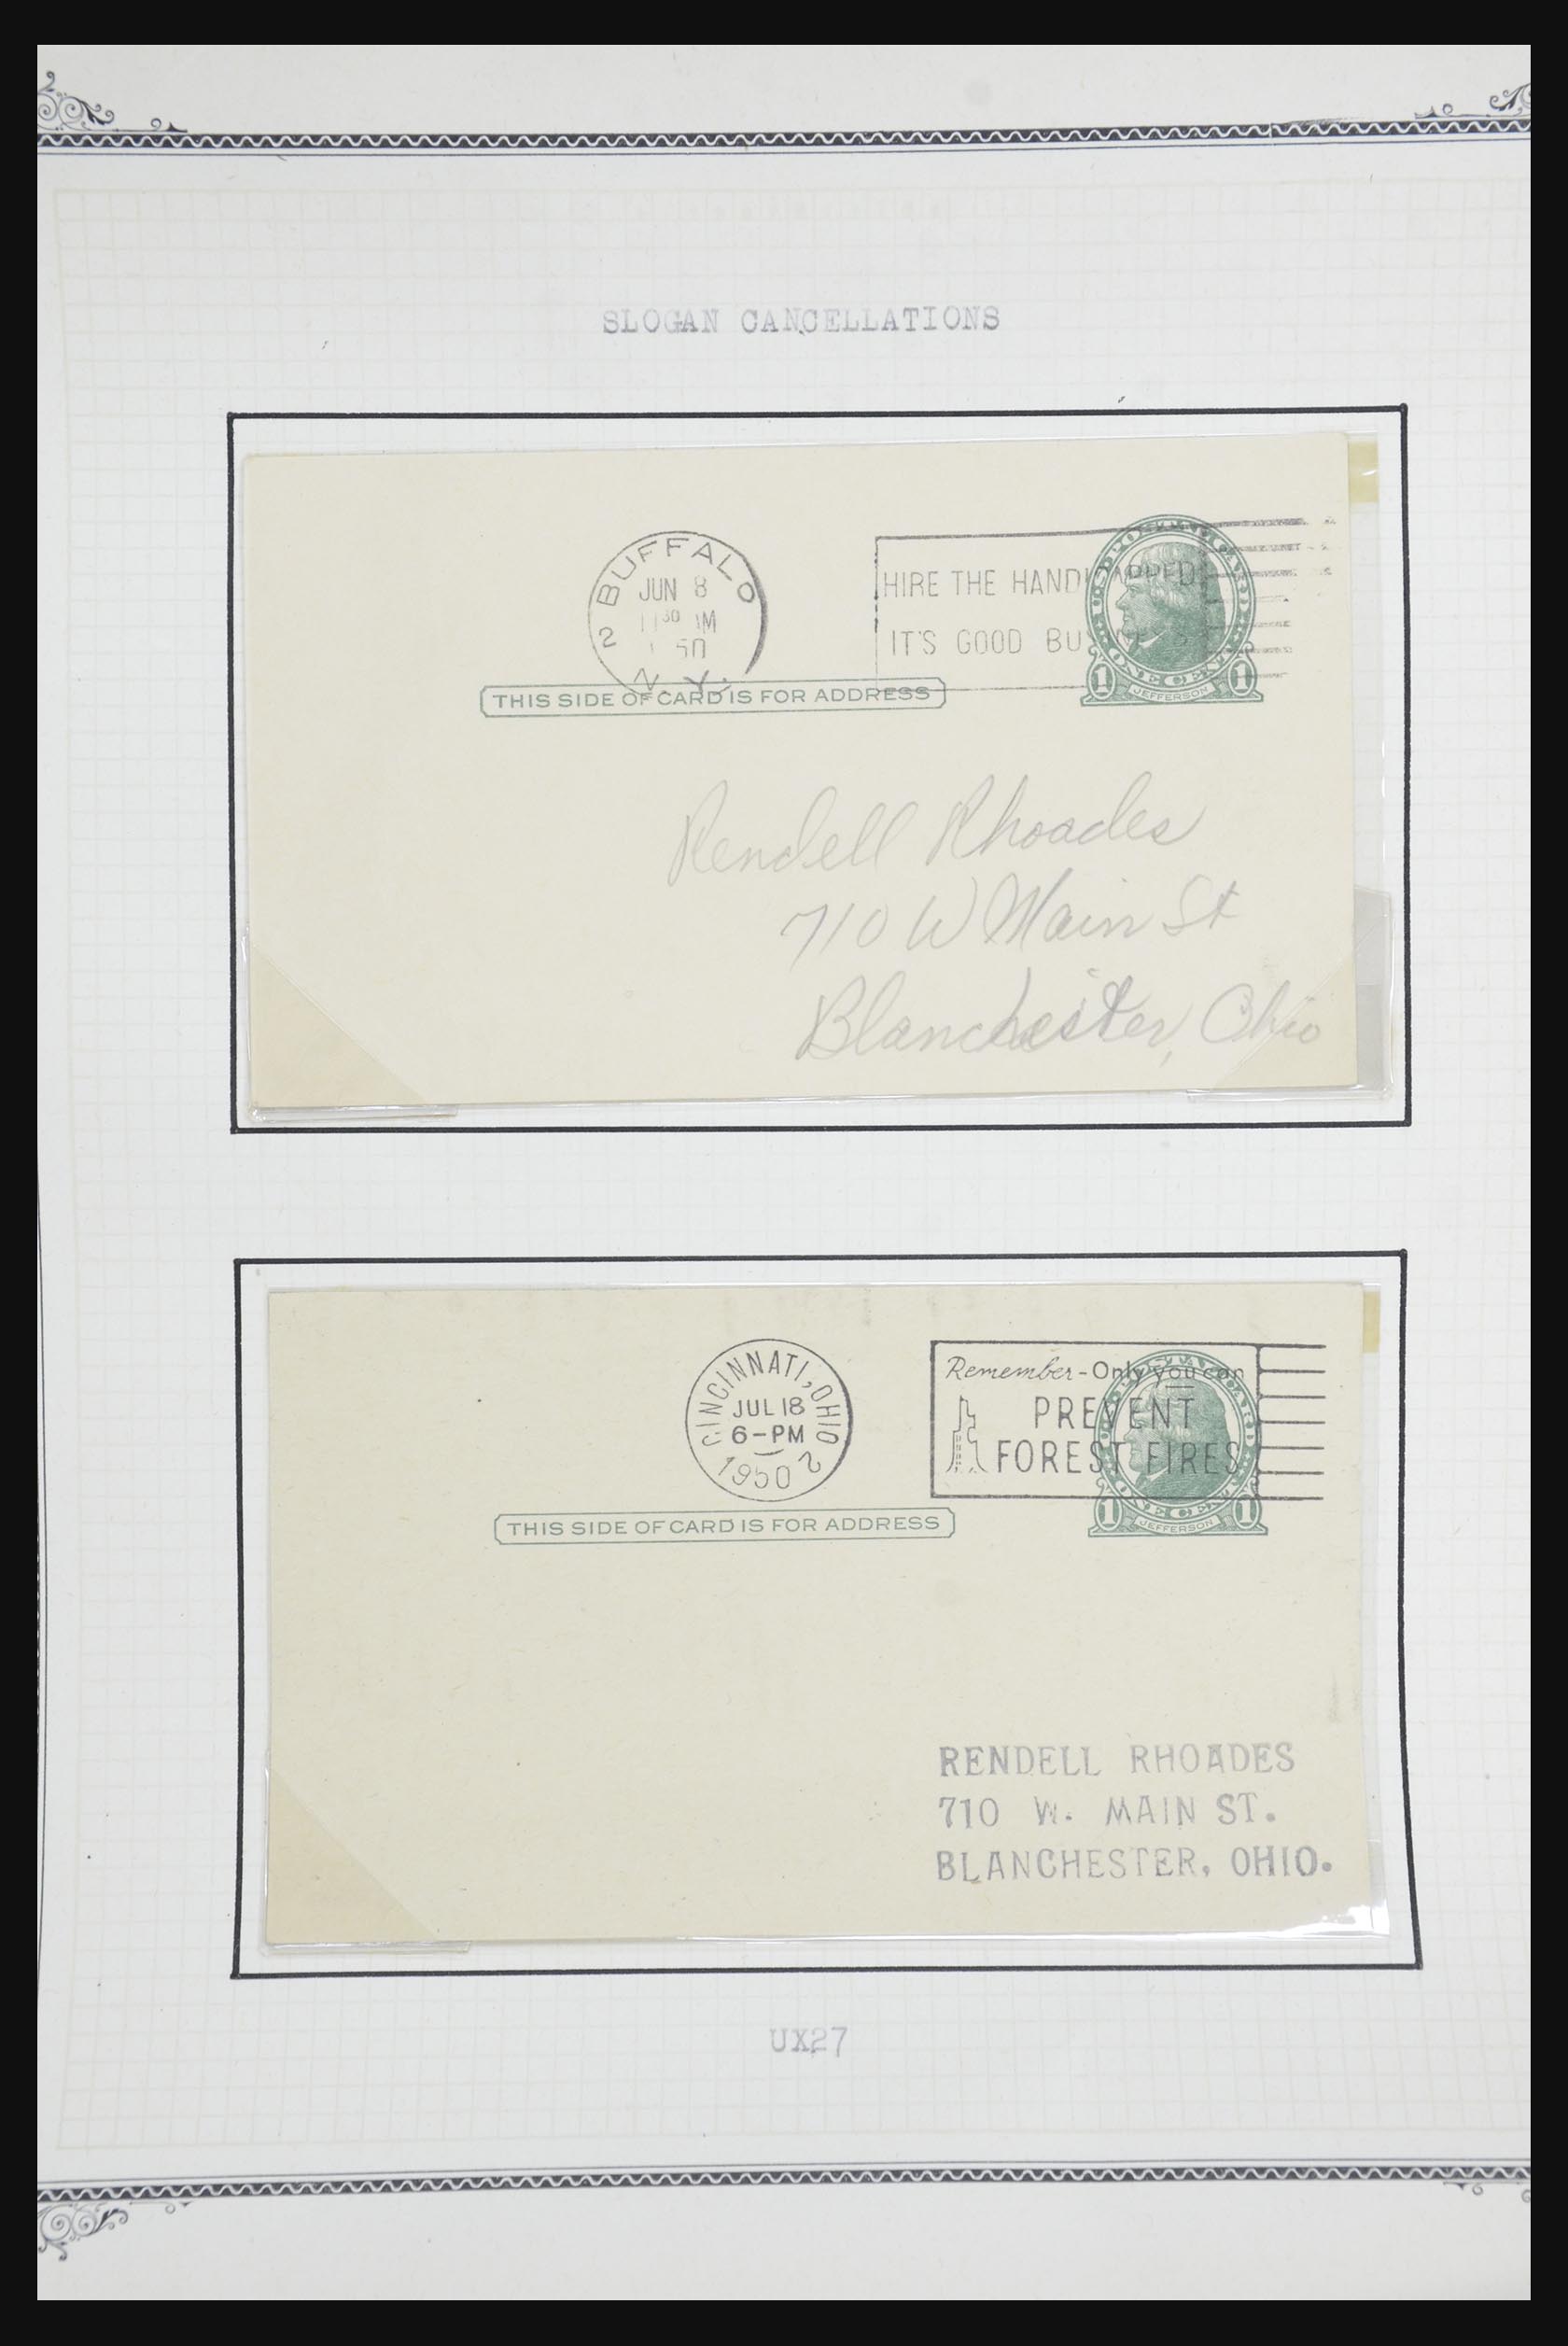 32209 562 - 32209 USA postal cards 1873-1950.